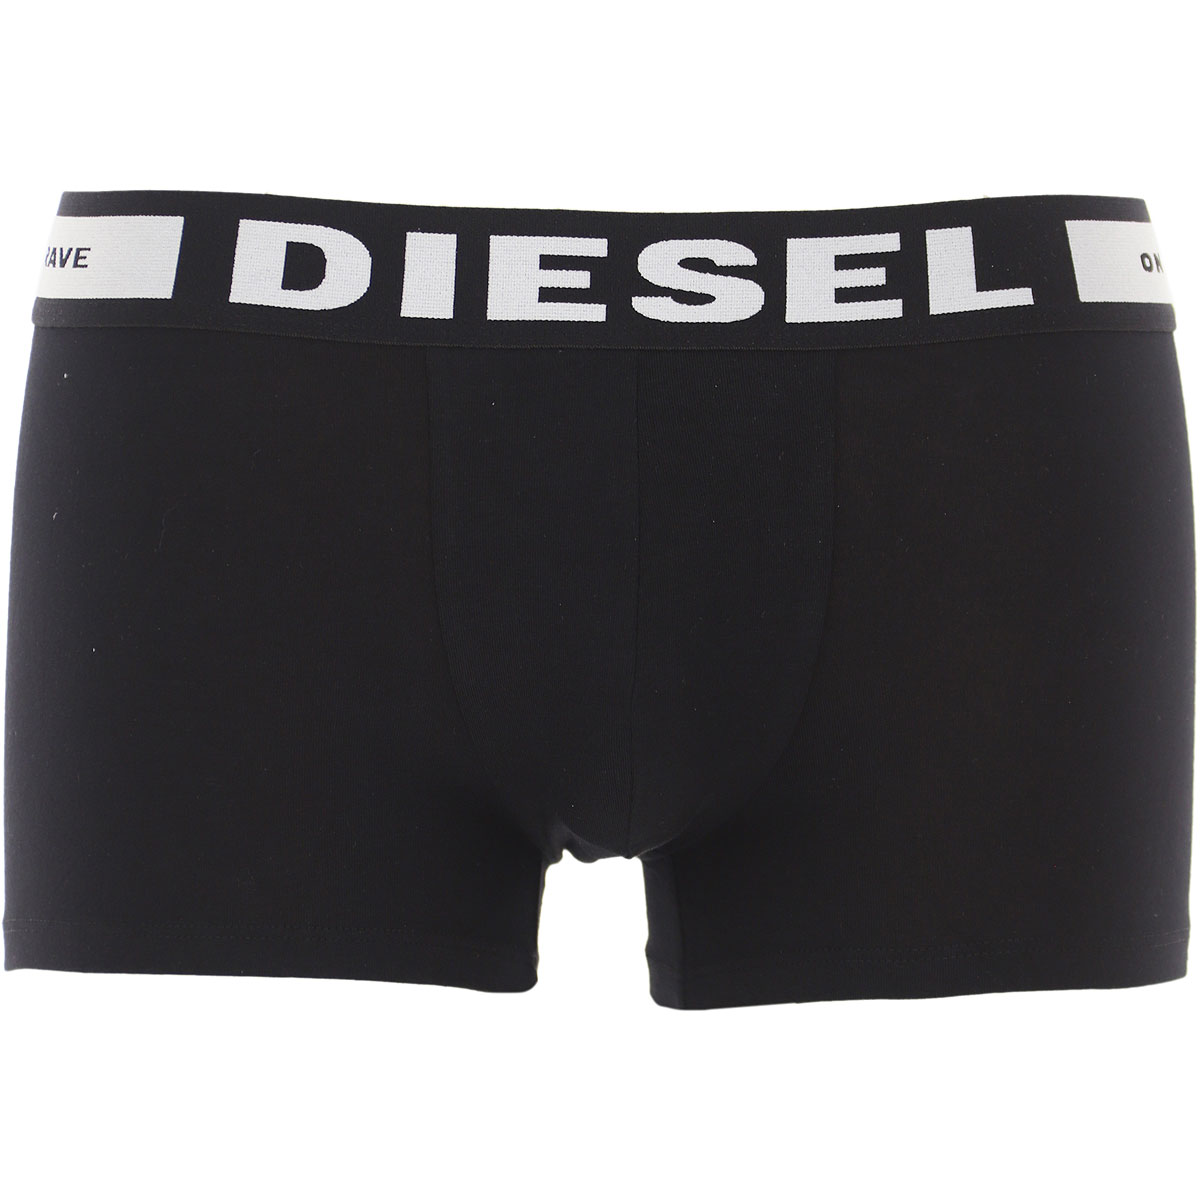 Mens Underwear Diesel, Style code: 00s7j4-0sfac-e5493